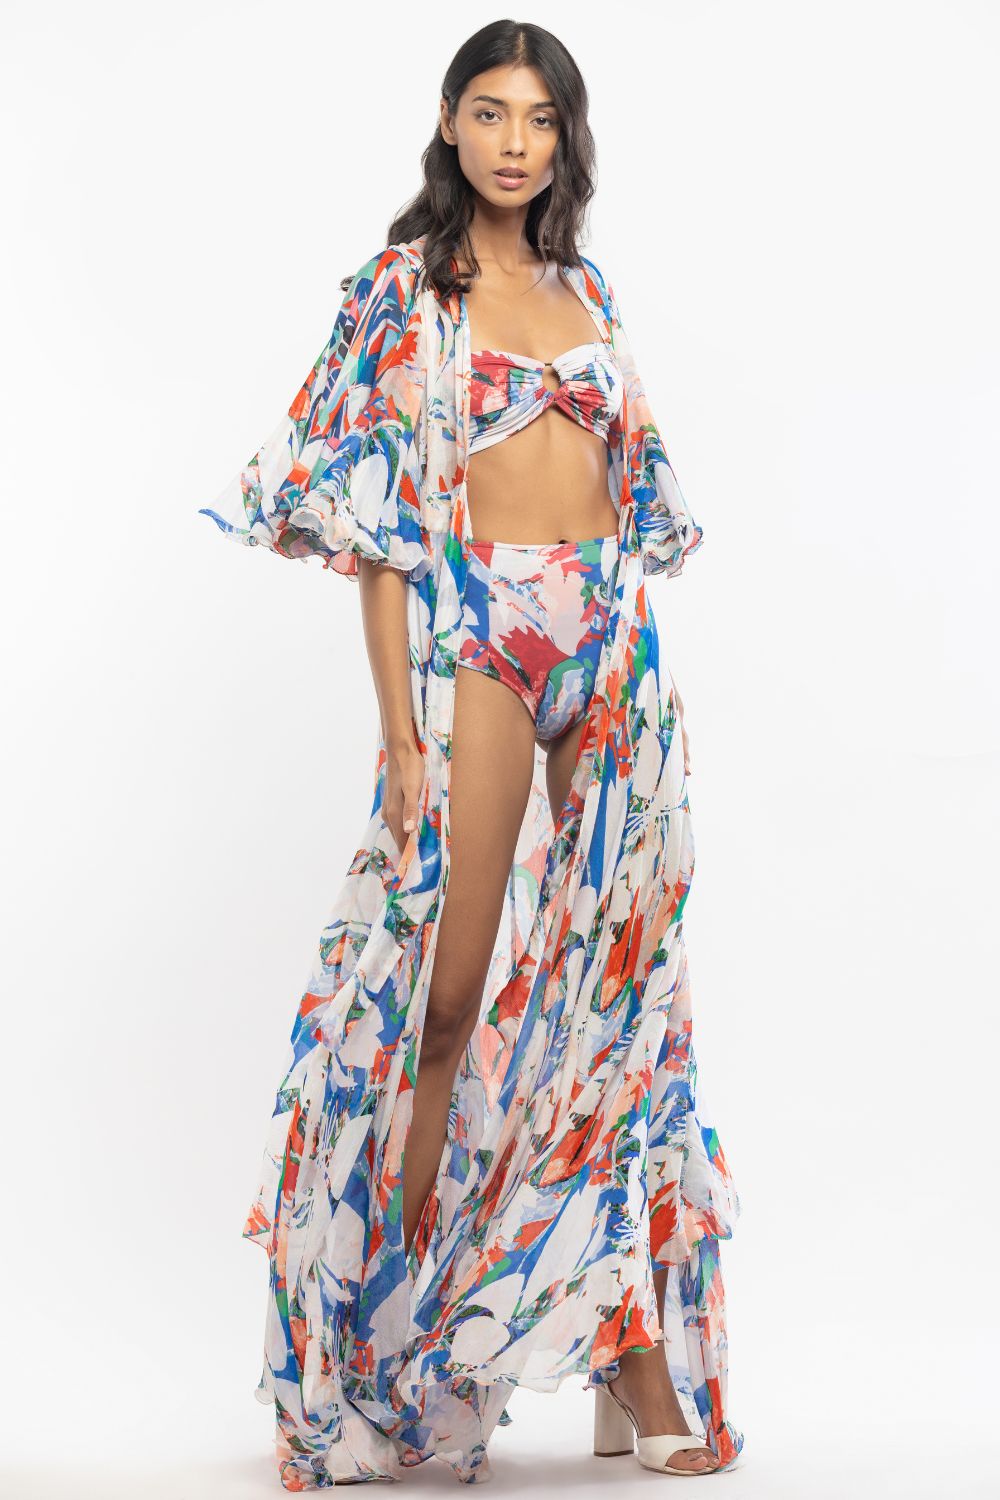 Lycra Printed Two Piece Bikini Set With Chiffon Cape